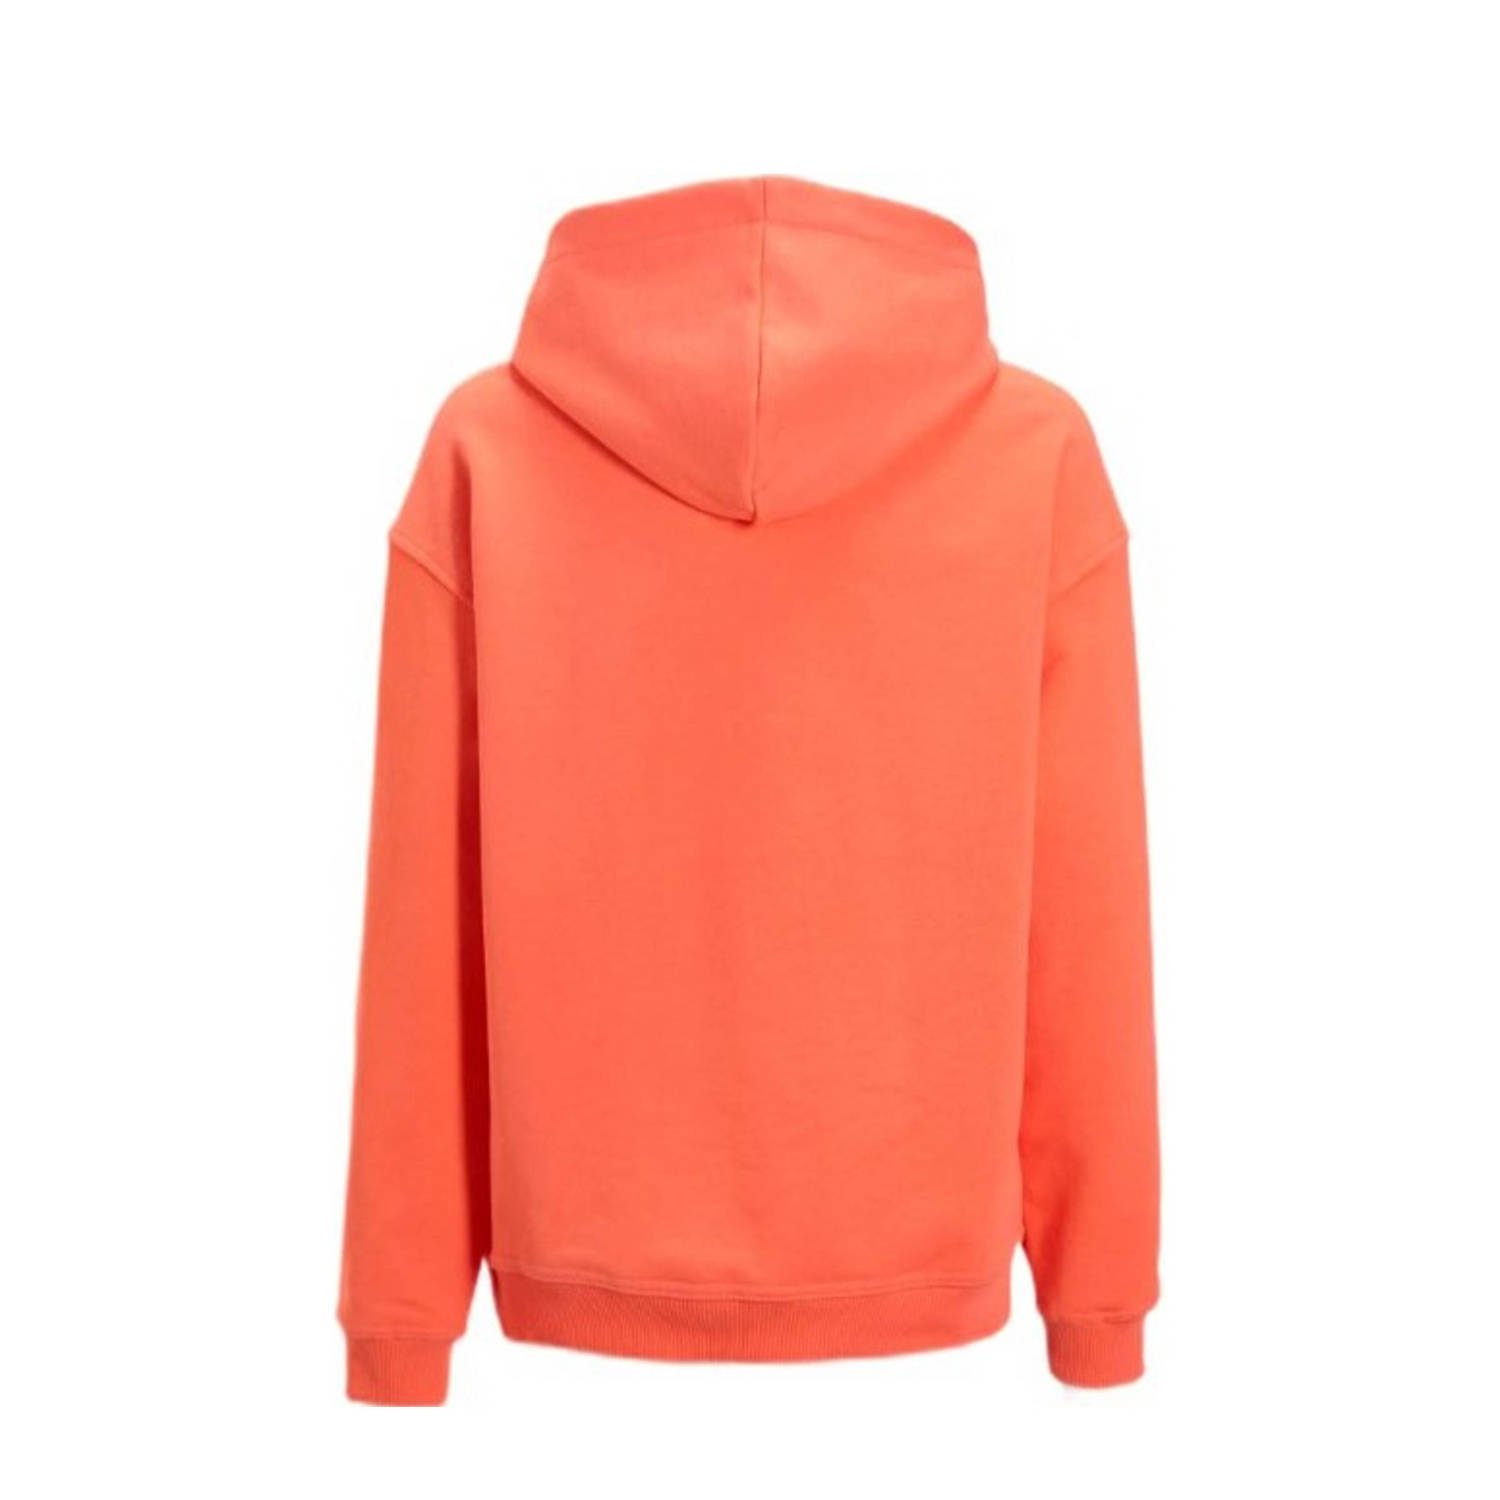 BLACK BANANAS hoodie oranje Sweater Effen 128 | Sweater van